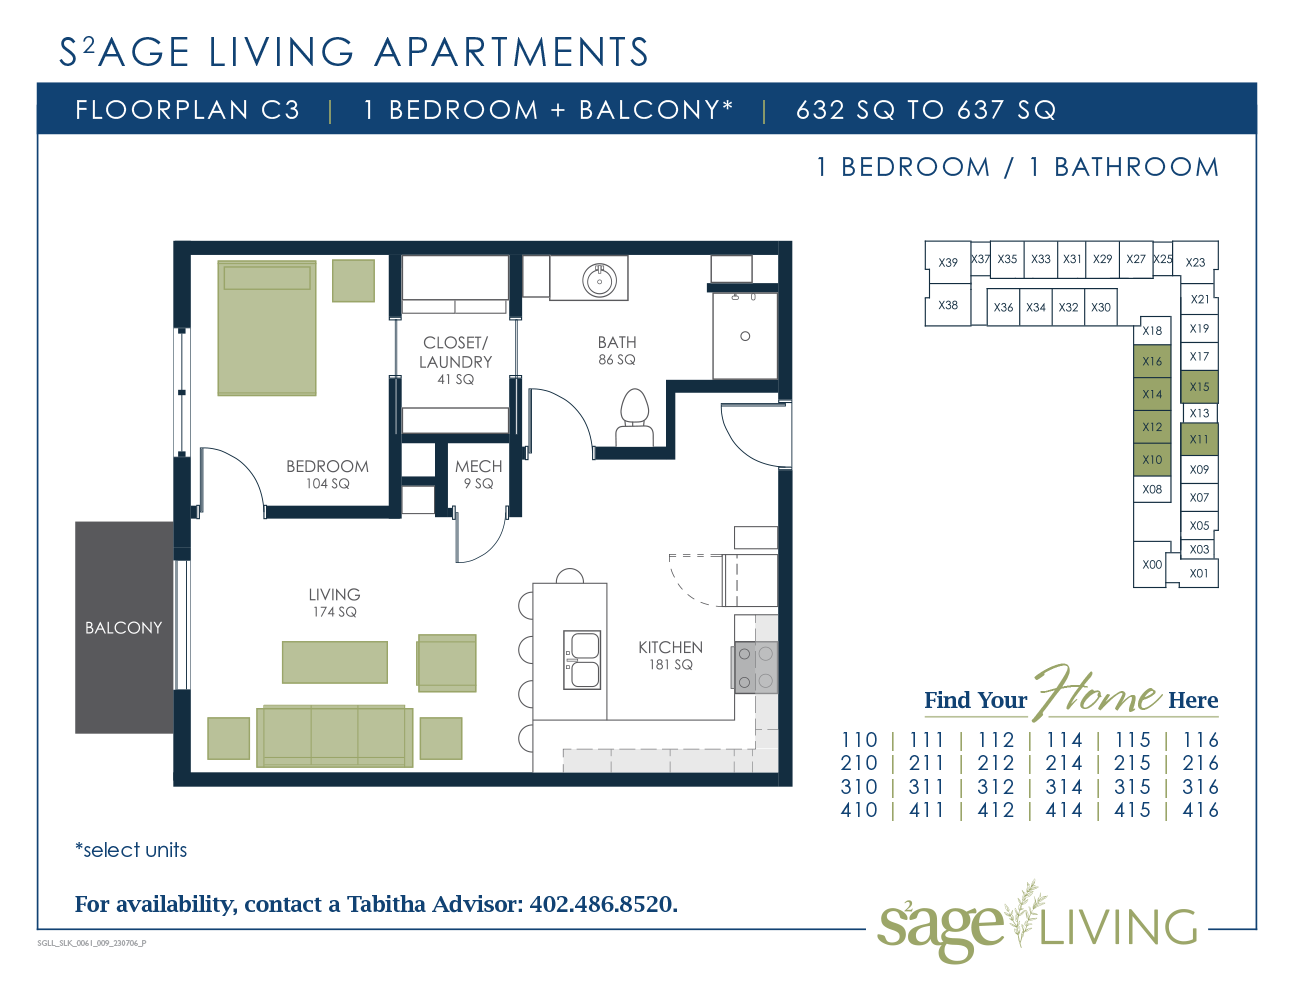 S2age Living Floor Plan, Apartment C3